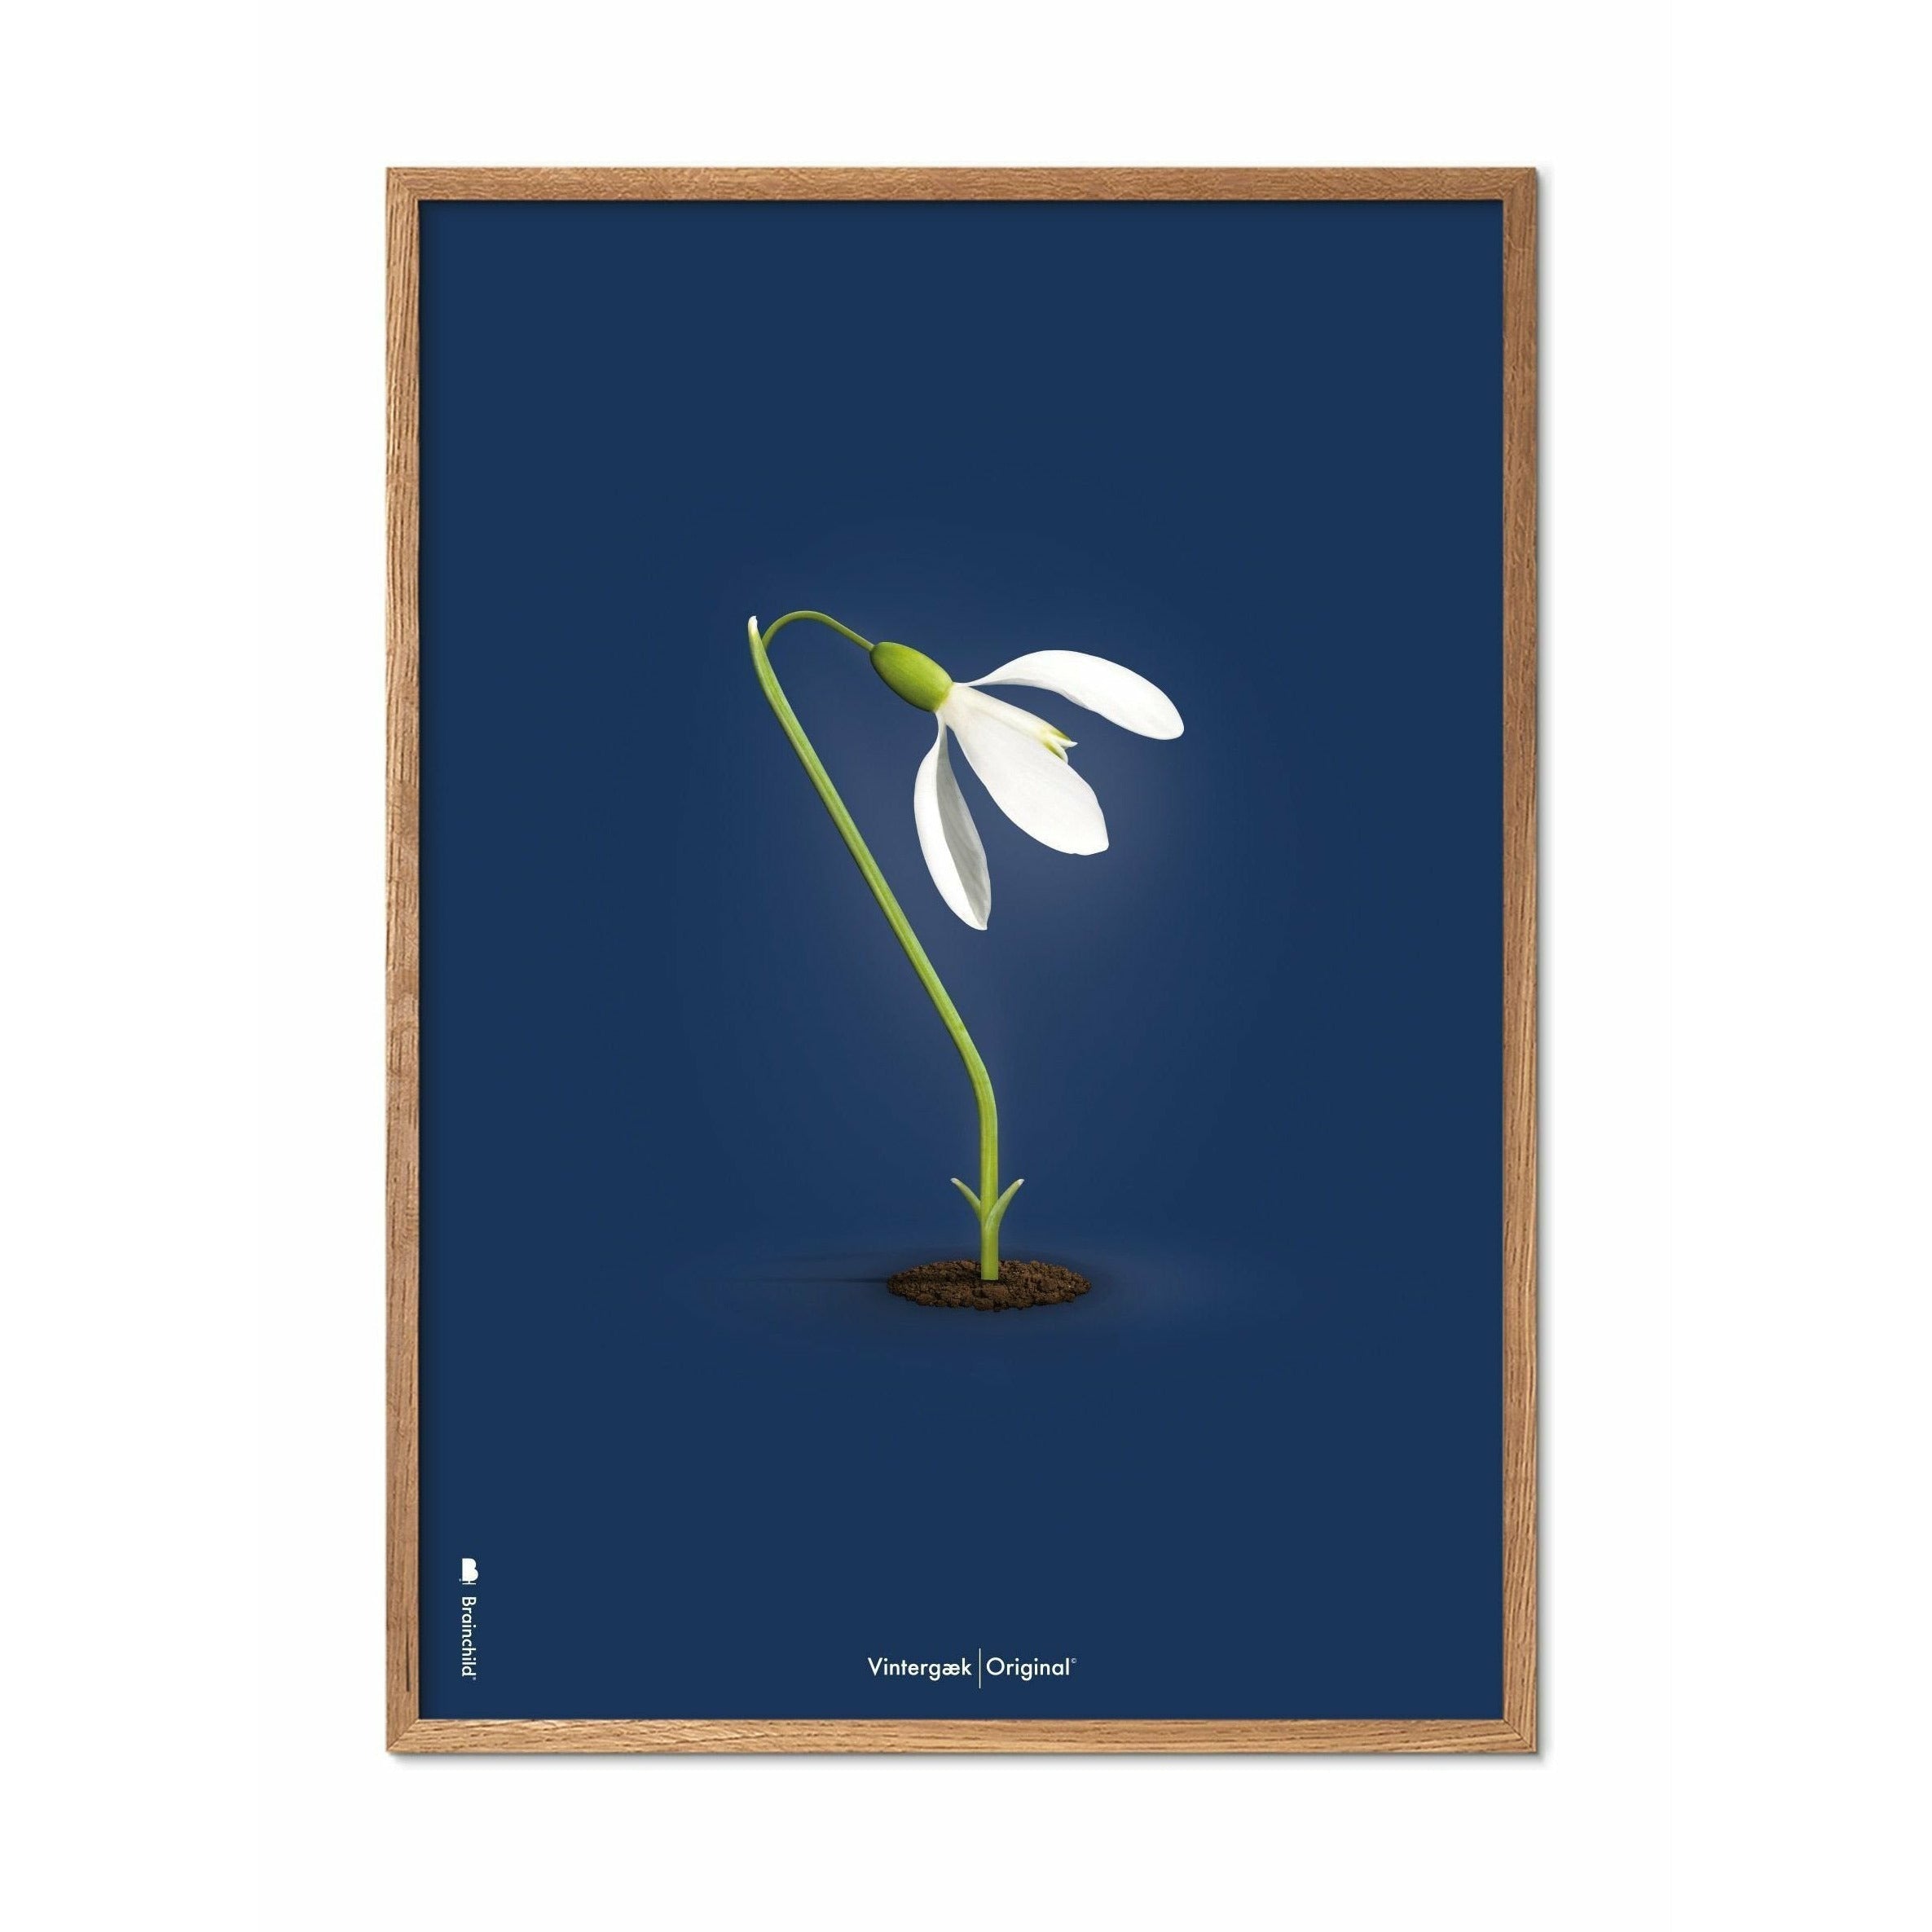 Brainchild Snowdrop Classic Poster, Frame Made Of Light Wood A5, Dark Blue Background